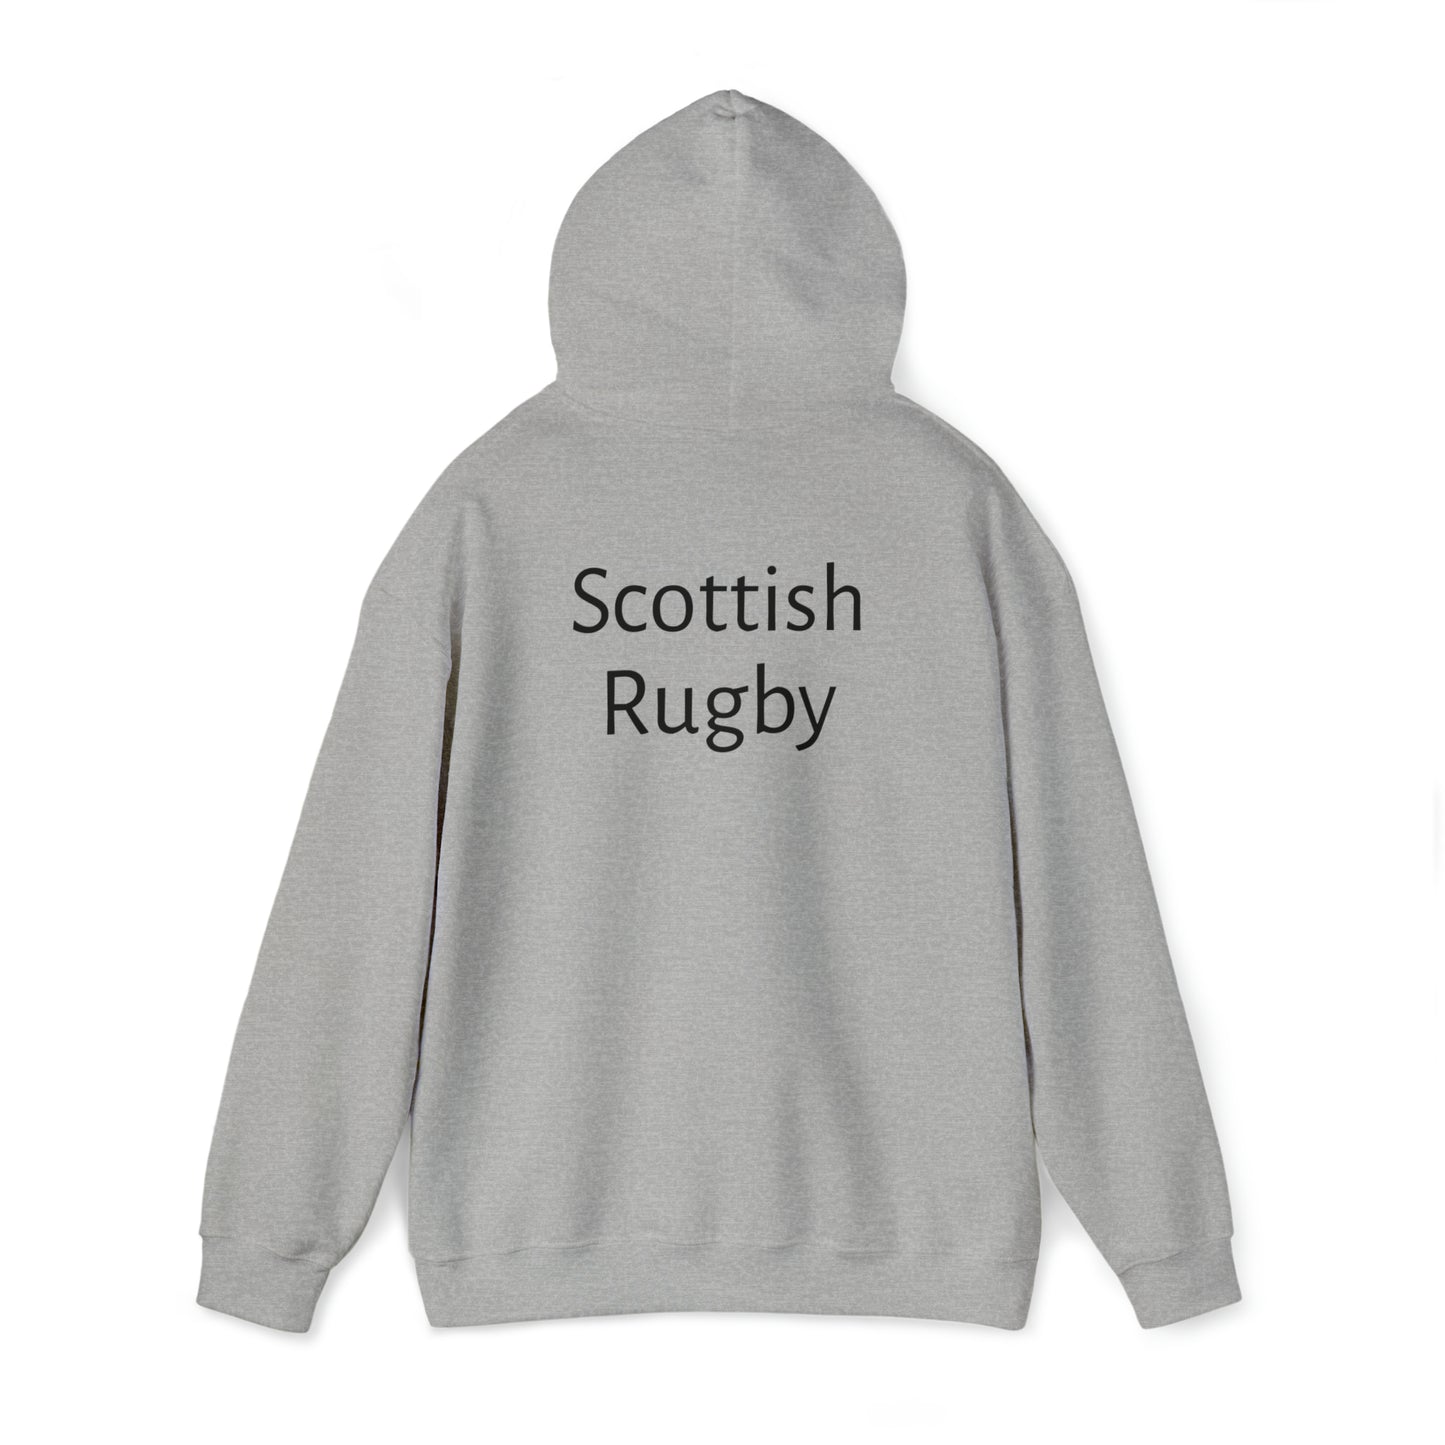 Scottish Flag - light hoodies